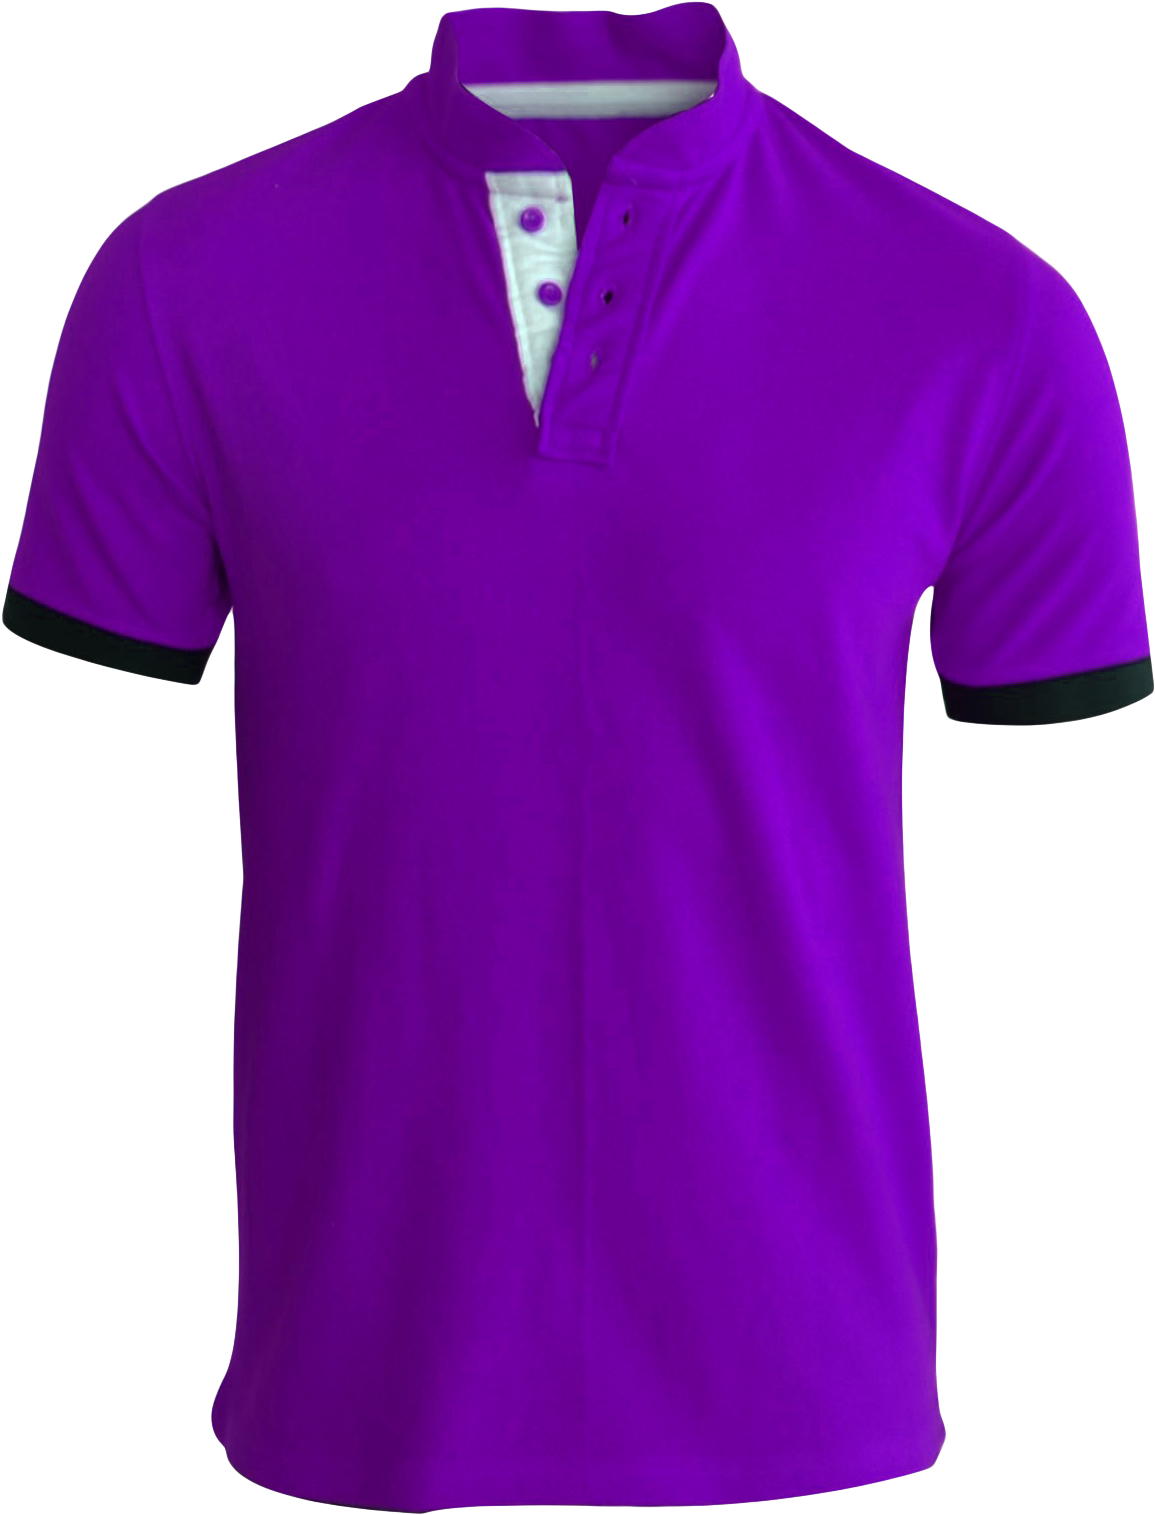 Men T Shirt Png Transparent Image - T Shirt Png Hd Clipart (1200x1616), Png Download